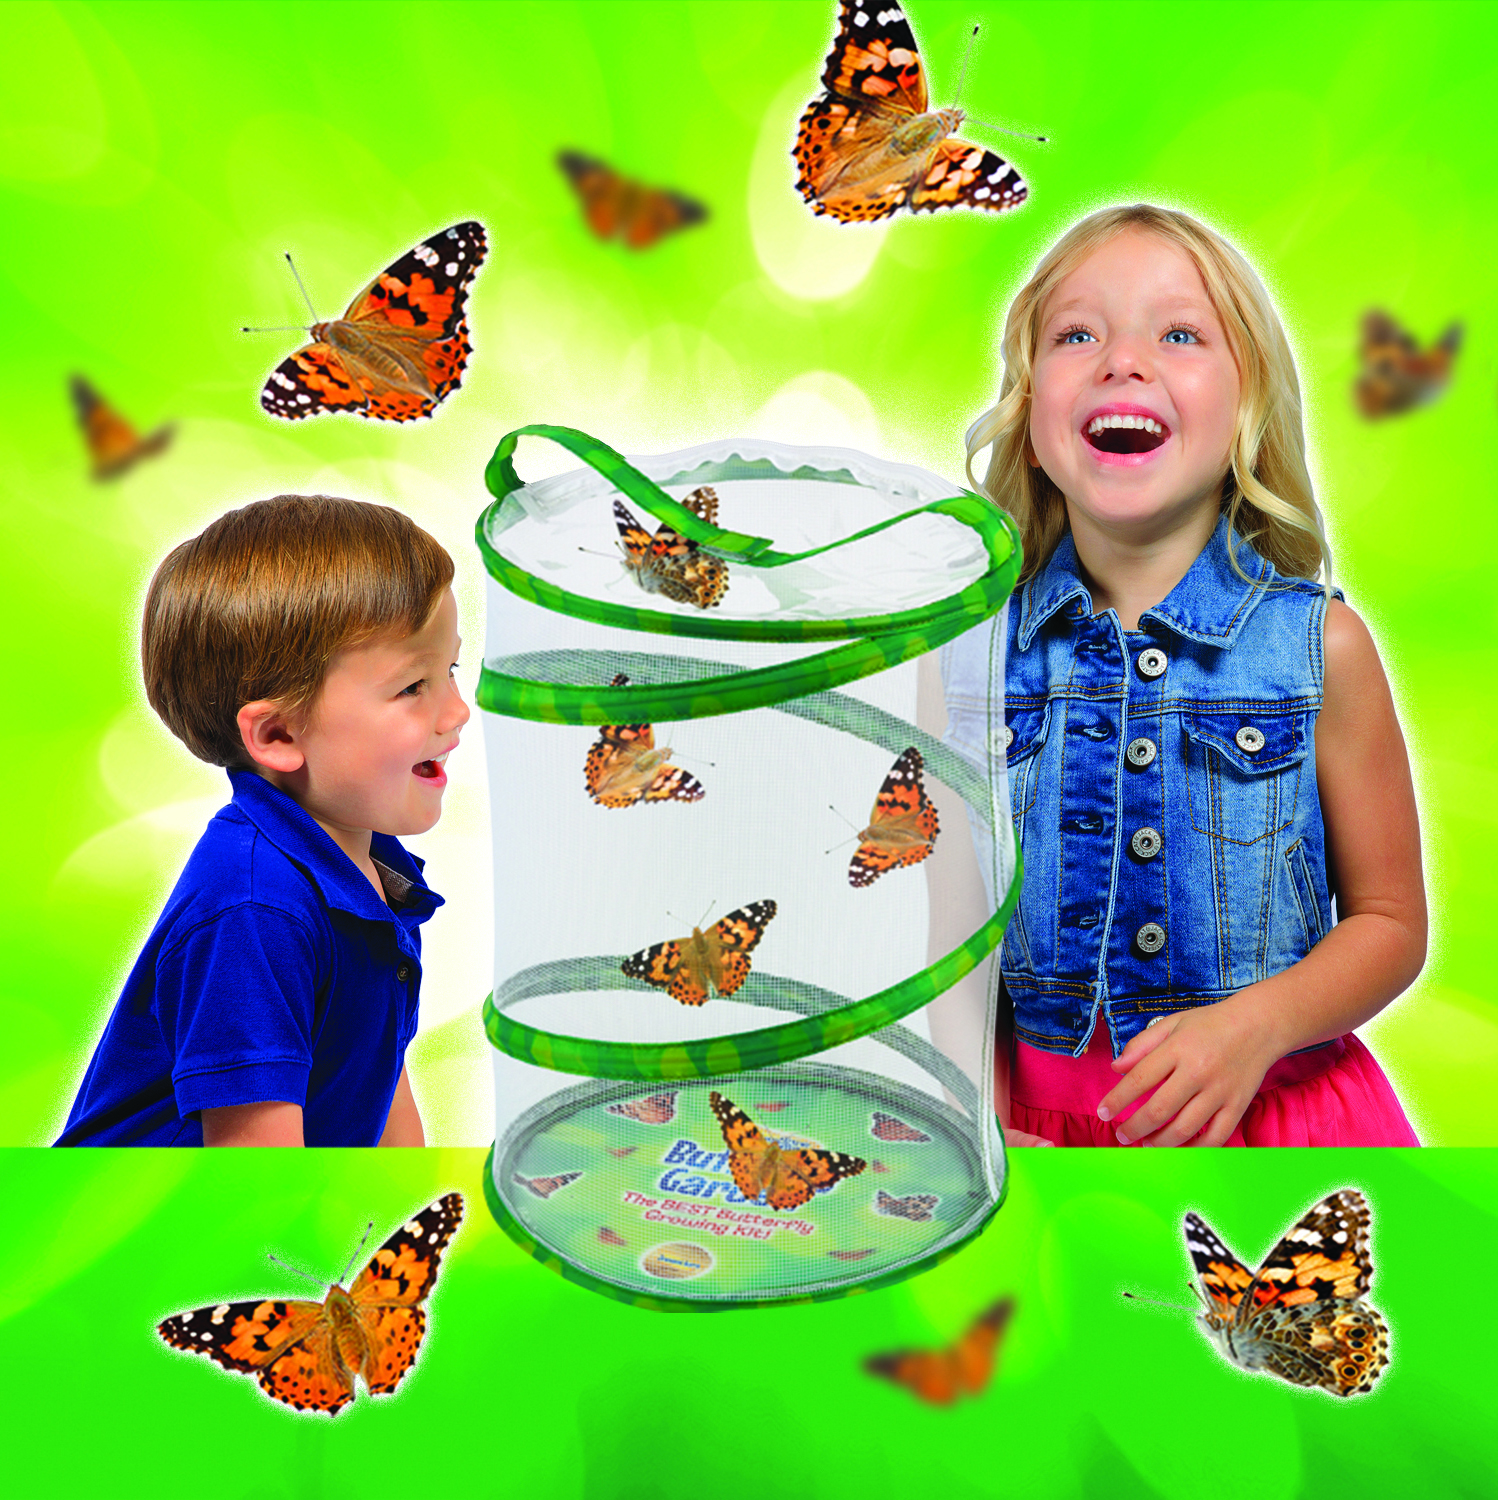 https://thetoyinsider.com/wp-content/uploads/2018/03/Lifestyle-image-kids-with-Butterfly-Habitat.jpg